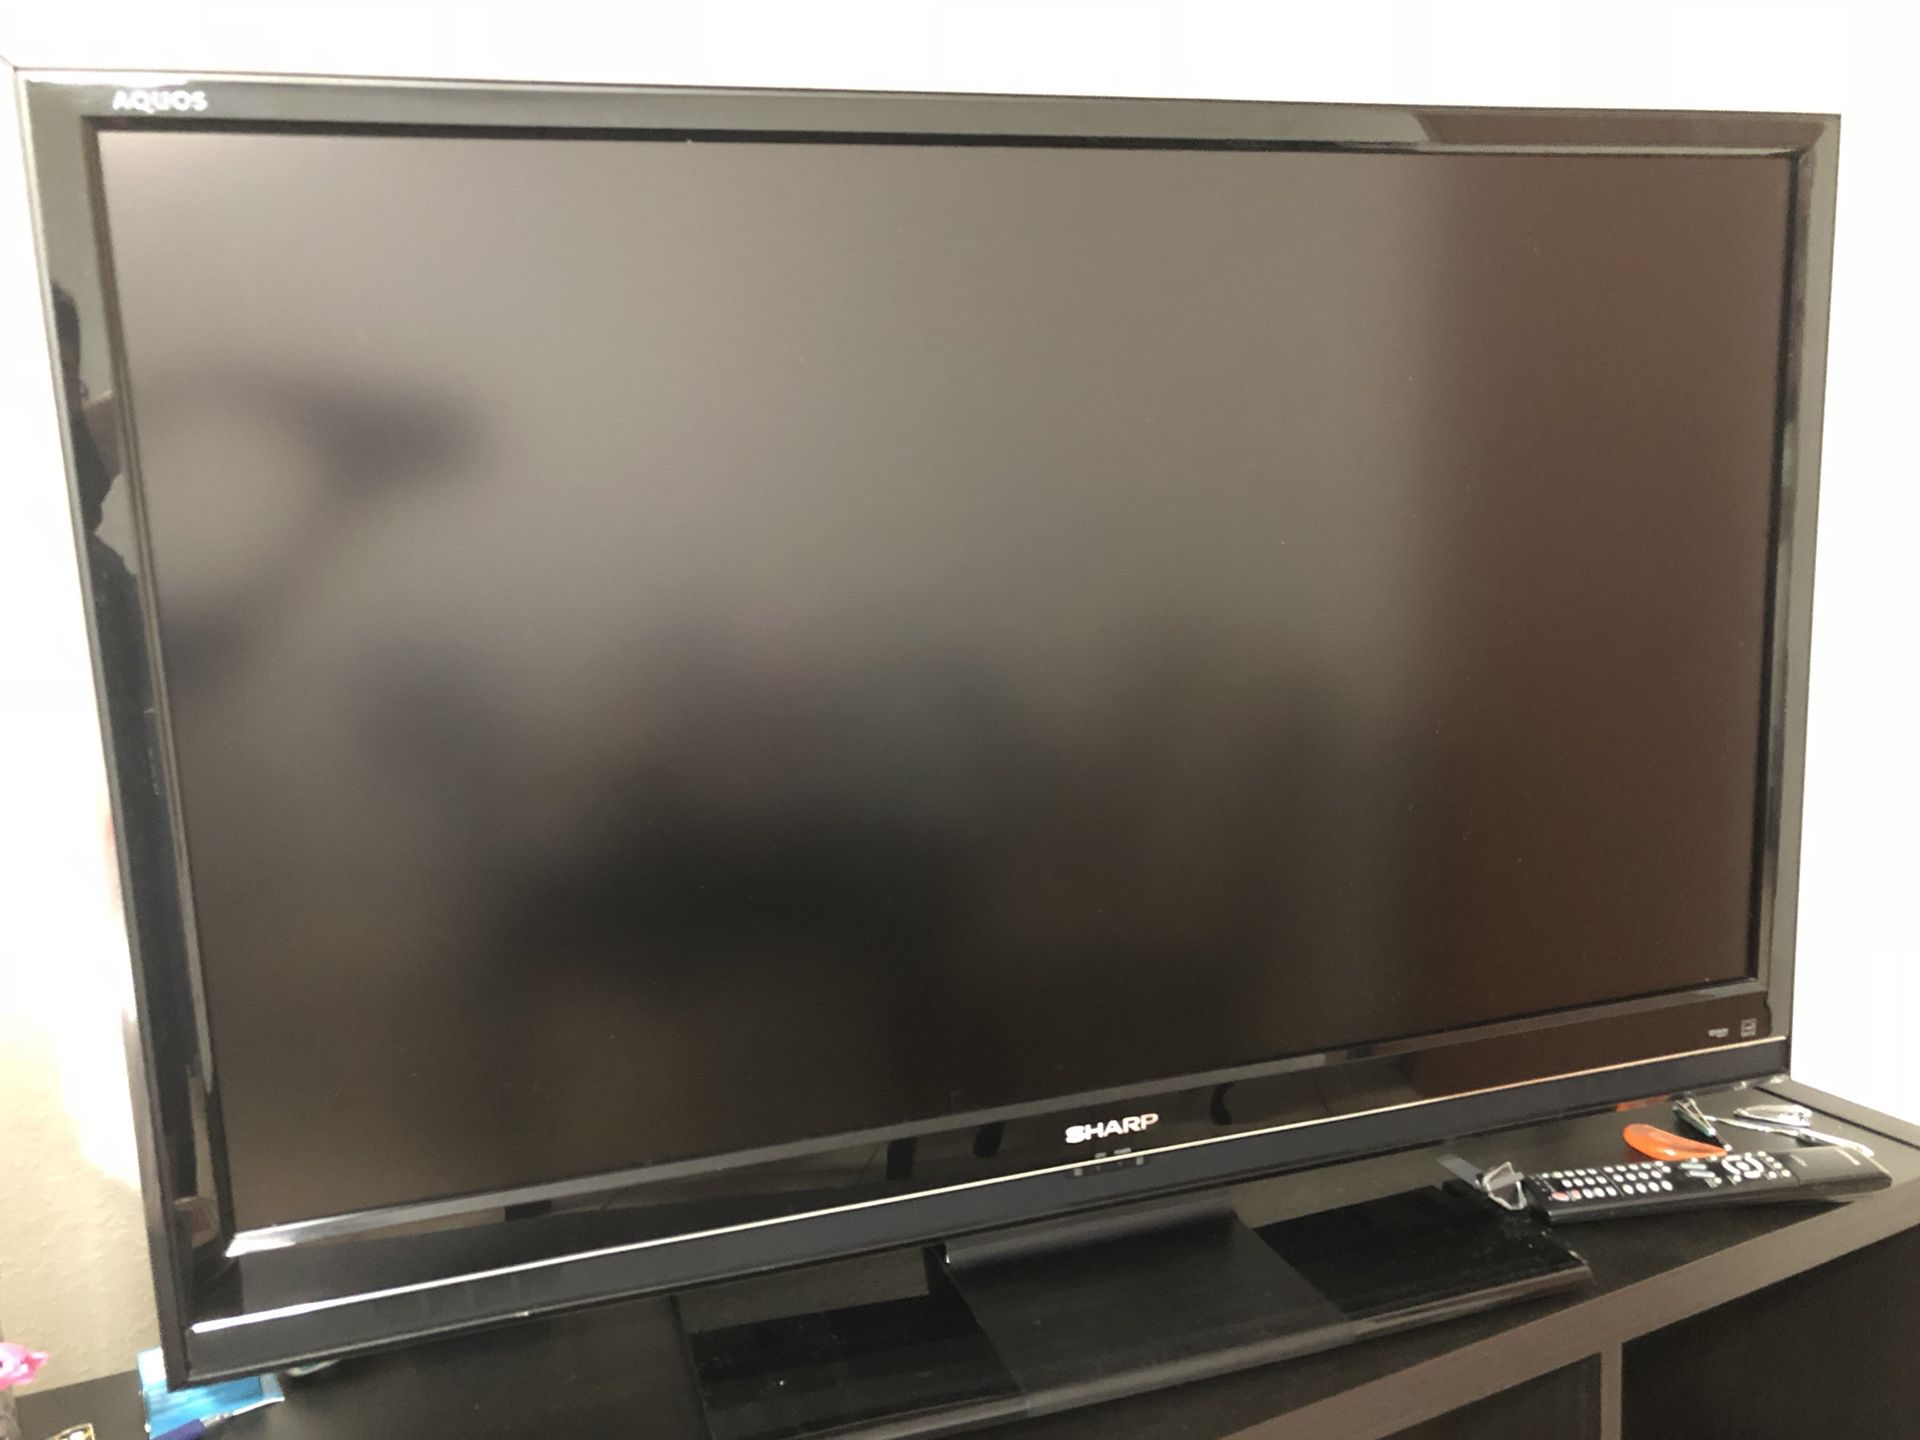 Sharp Aquos LC46D85U 46-Inch 1080p 120Hz LCD HDTV